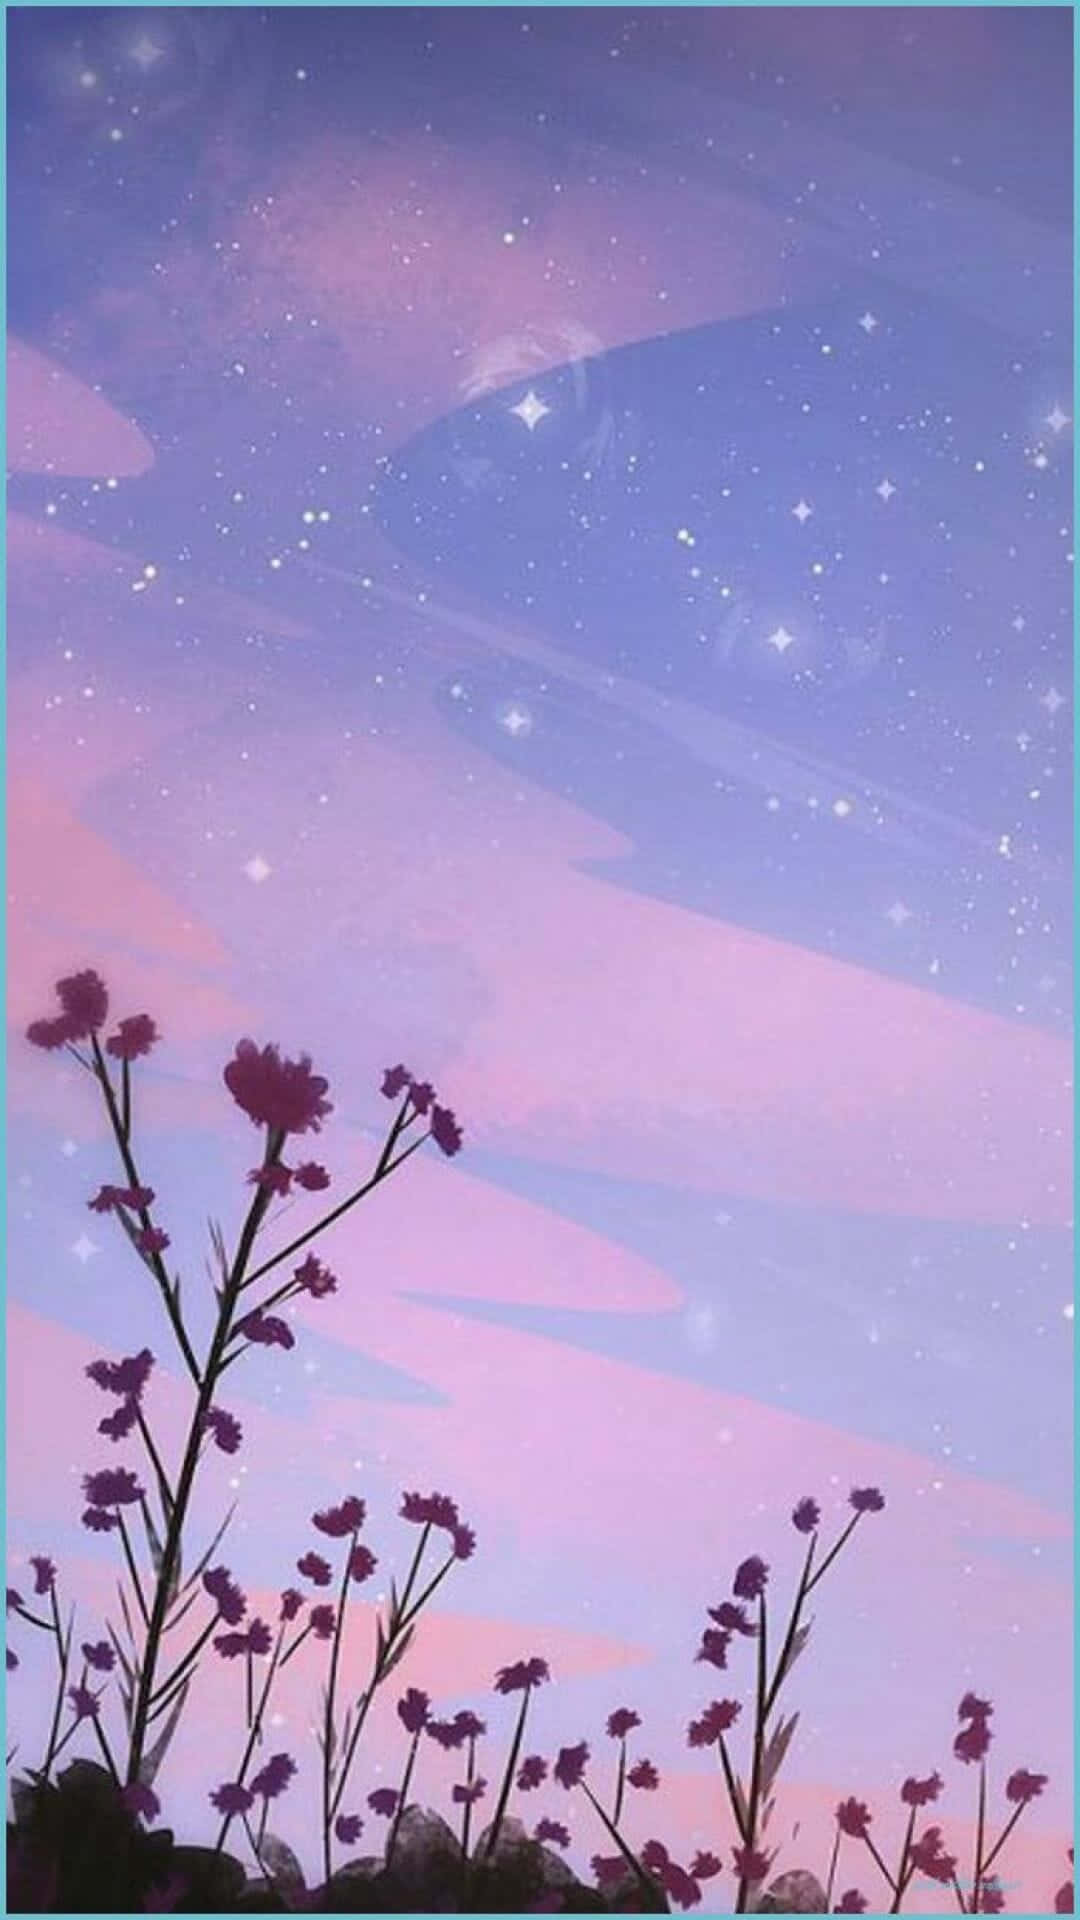 Free Pastel Purple Iphone Wallpaper Downloads, [100+] Pastel Purple Iphone  Wallpapers for FREE 